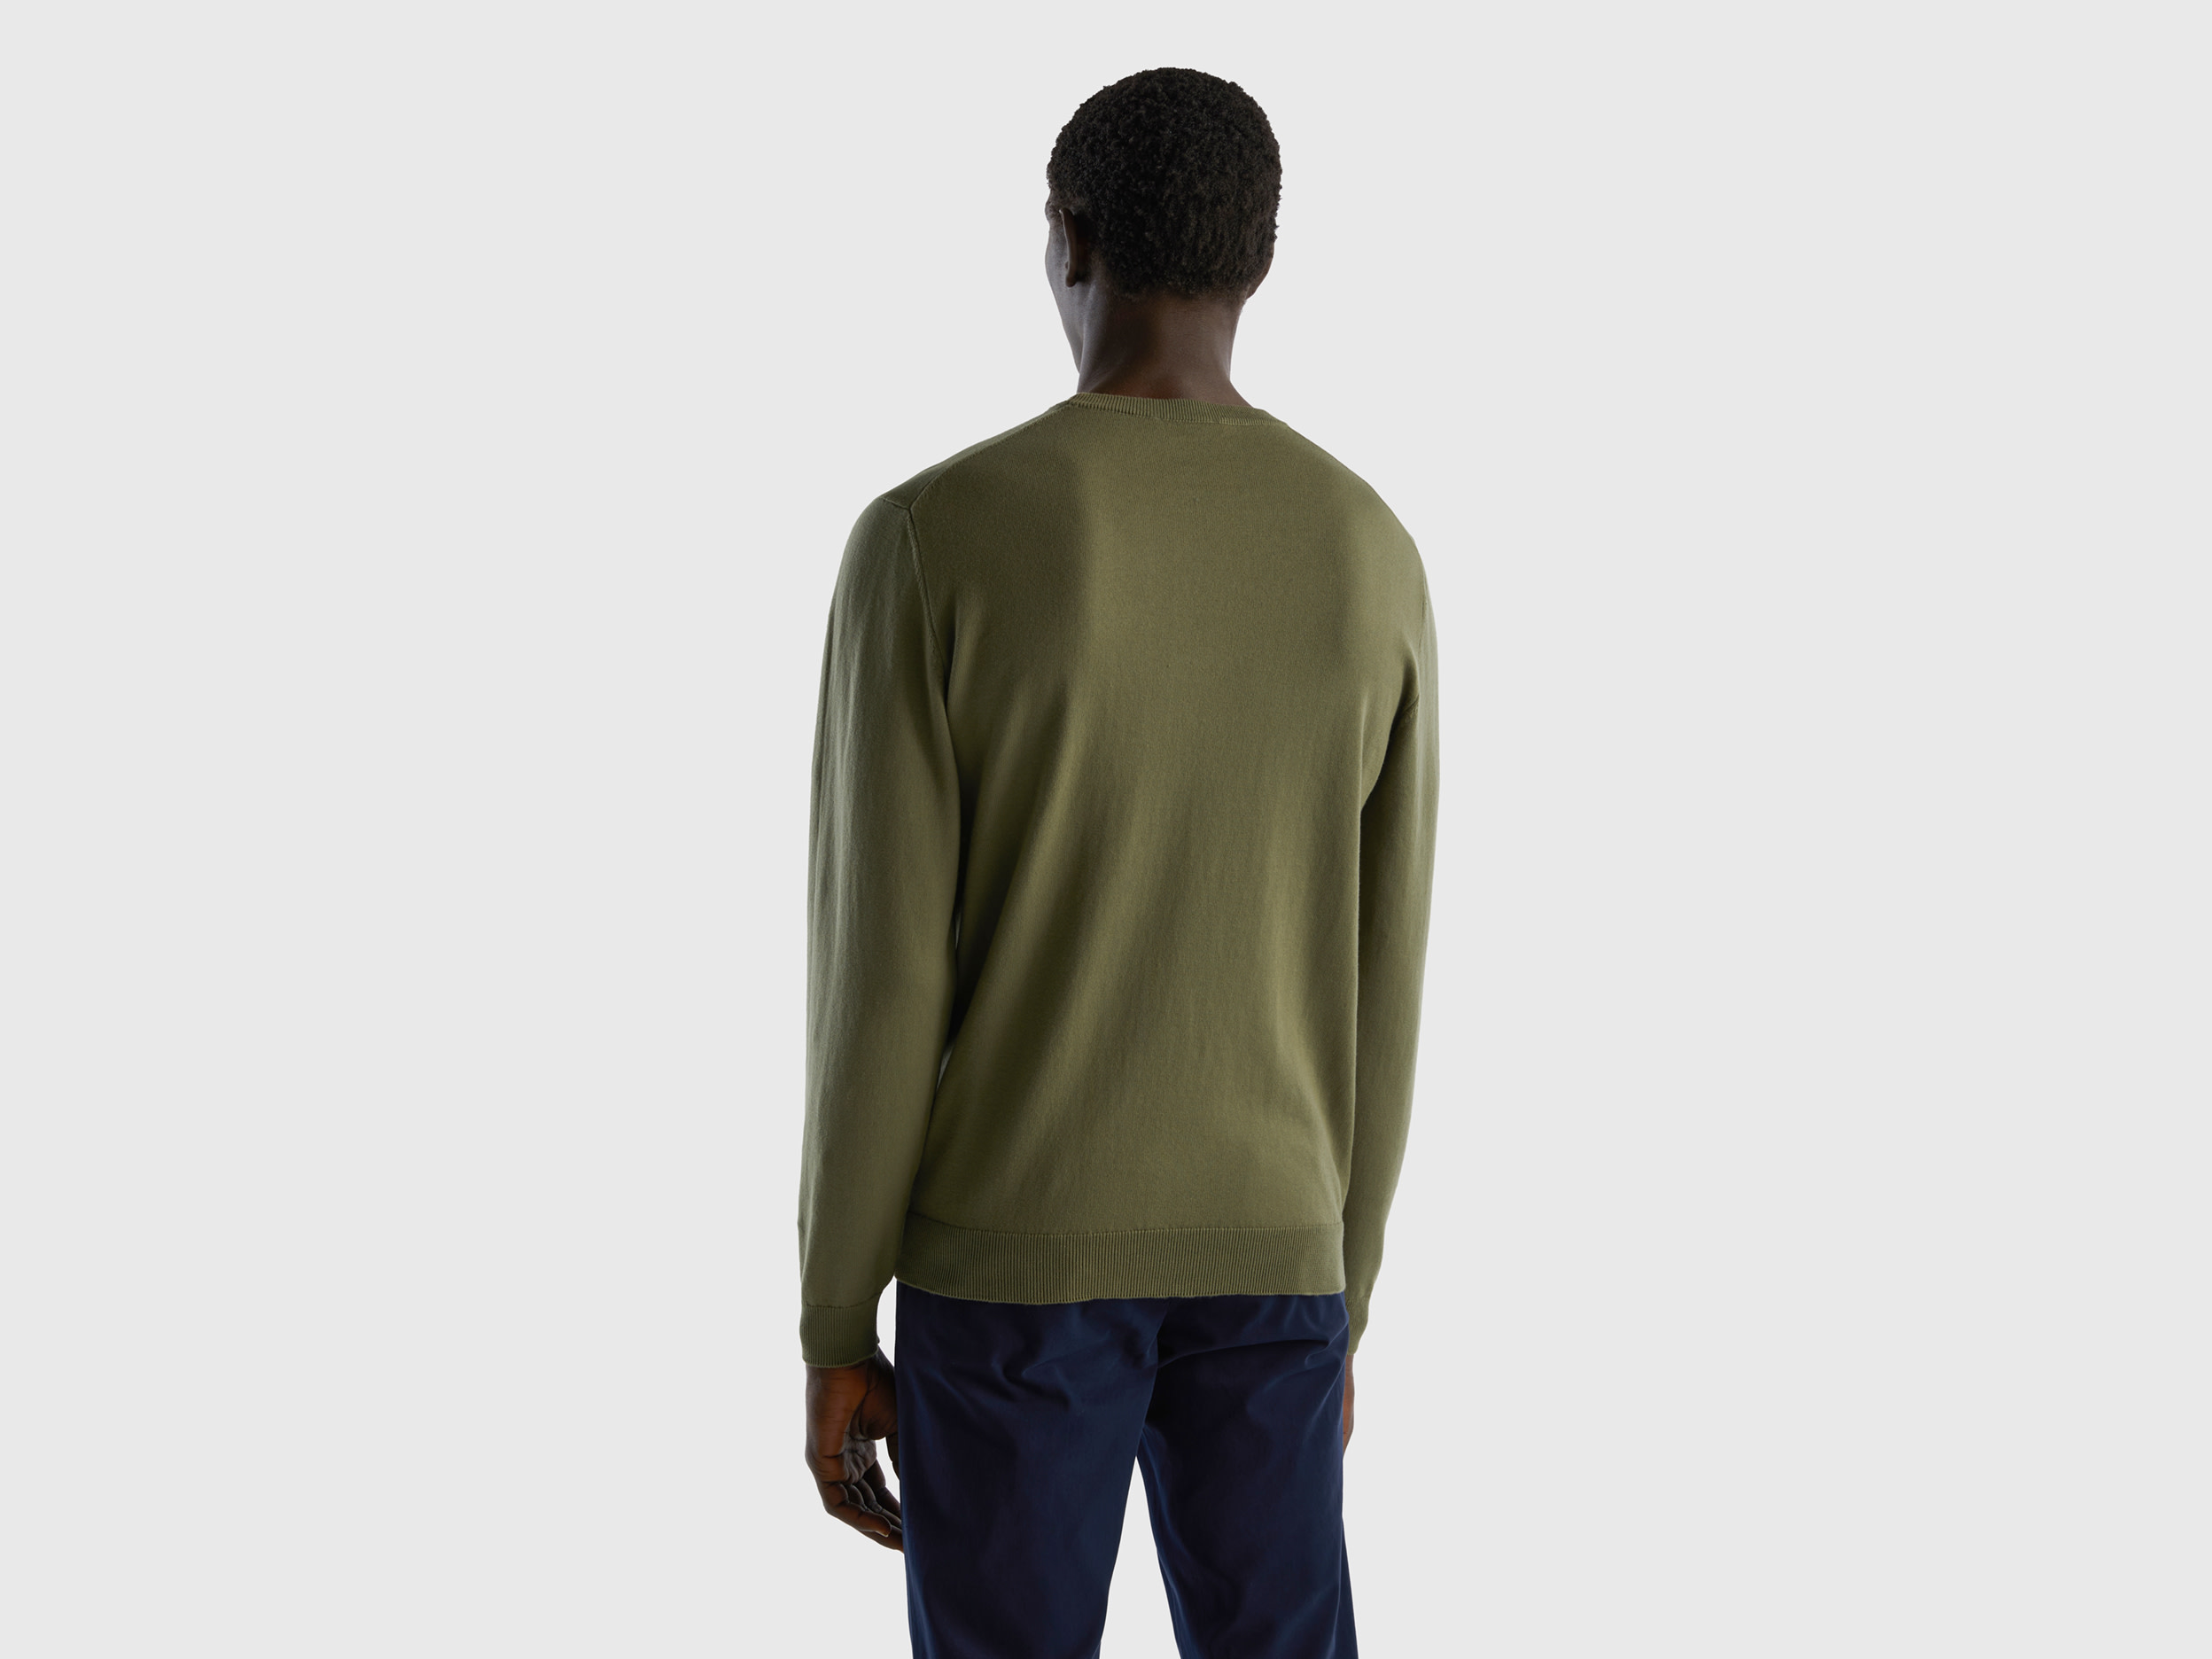 Benetton, Crew Neck Sweater In 100% Cotton, Taglia Xxl, Military Green, Men